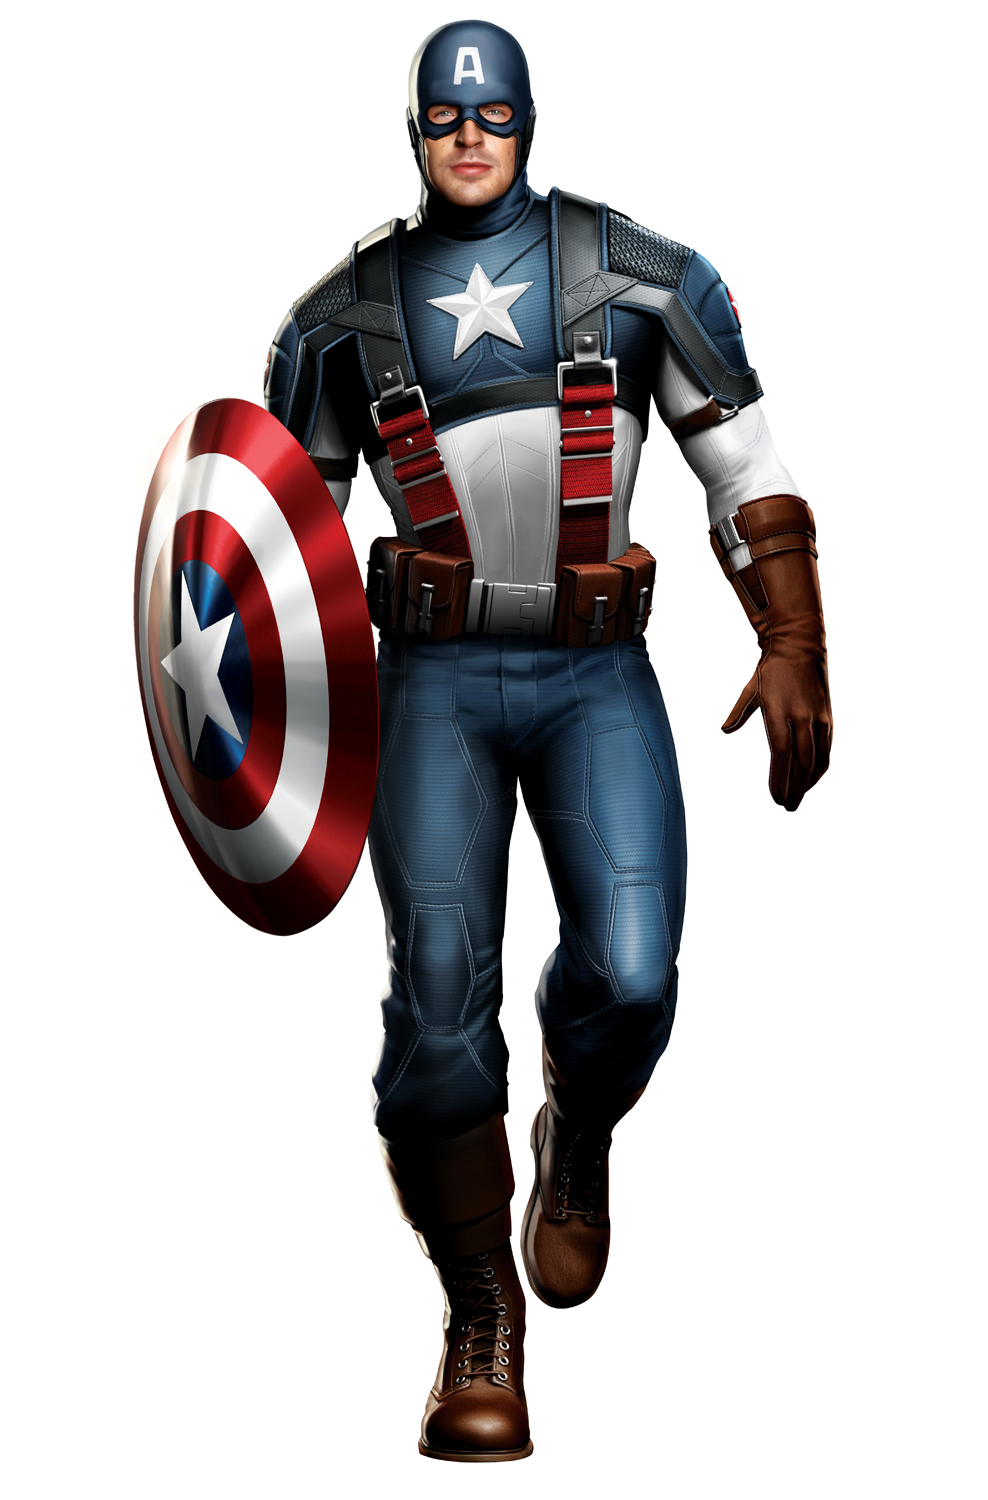 http://img1.wikia.nocookie.net/__cb20111216025110/marvelmovies/images/0/09/Captain_America_promoart.jpg